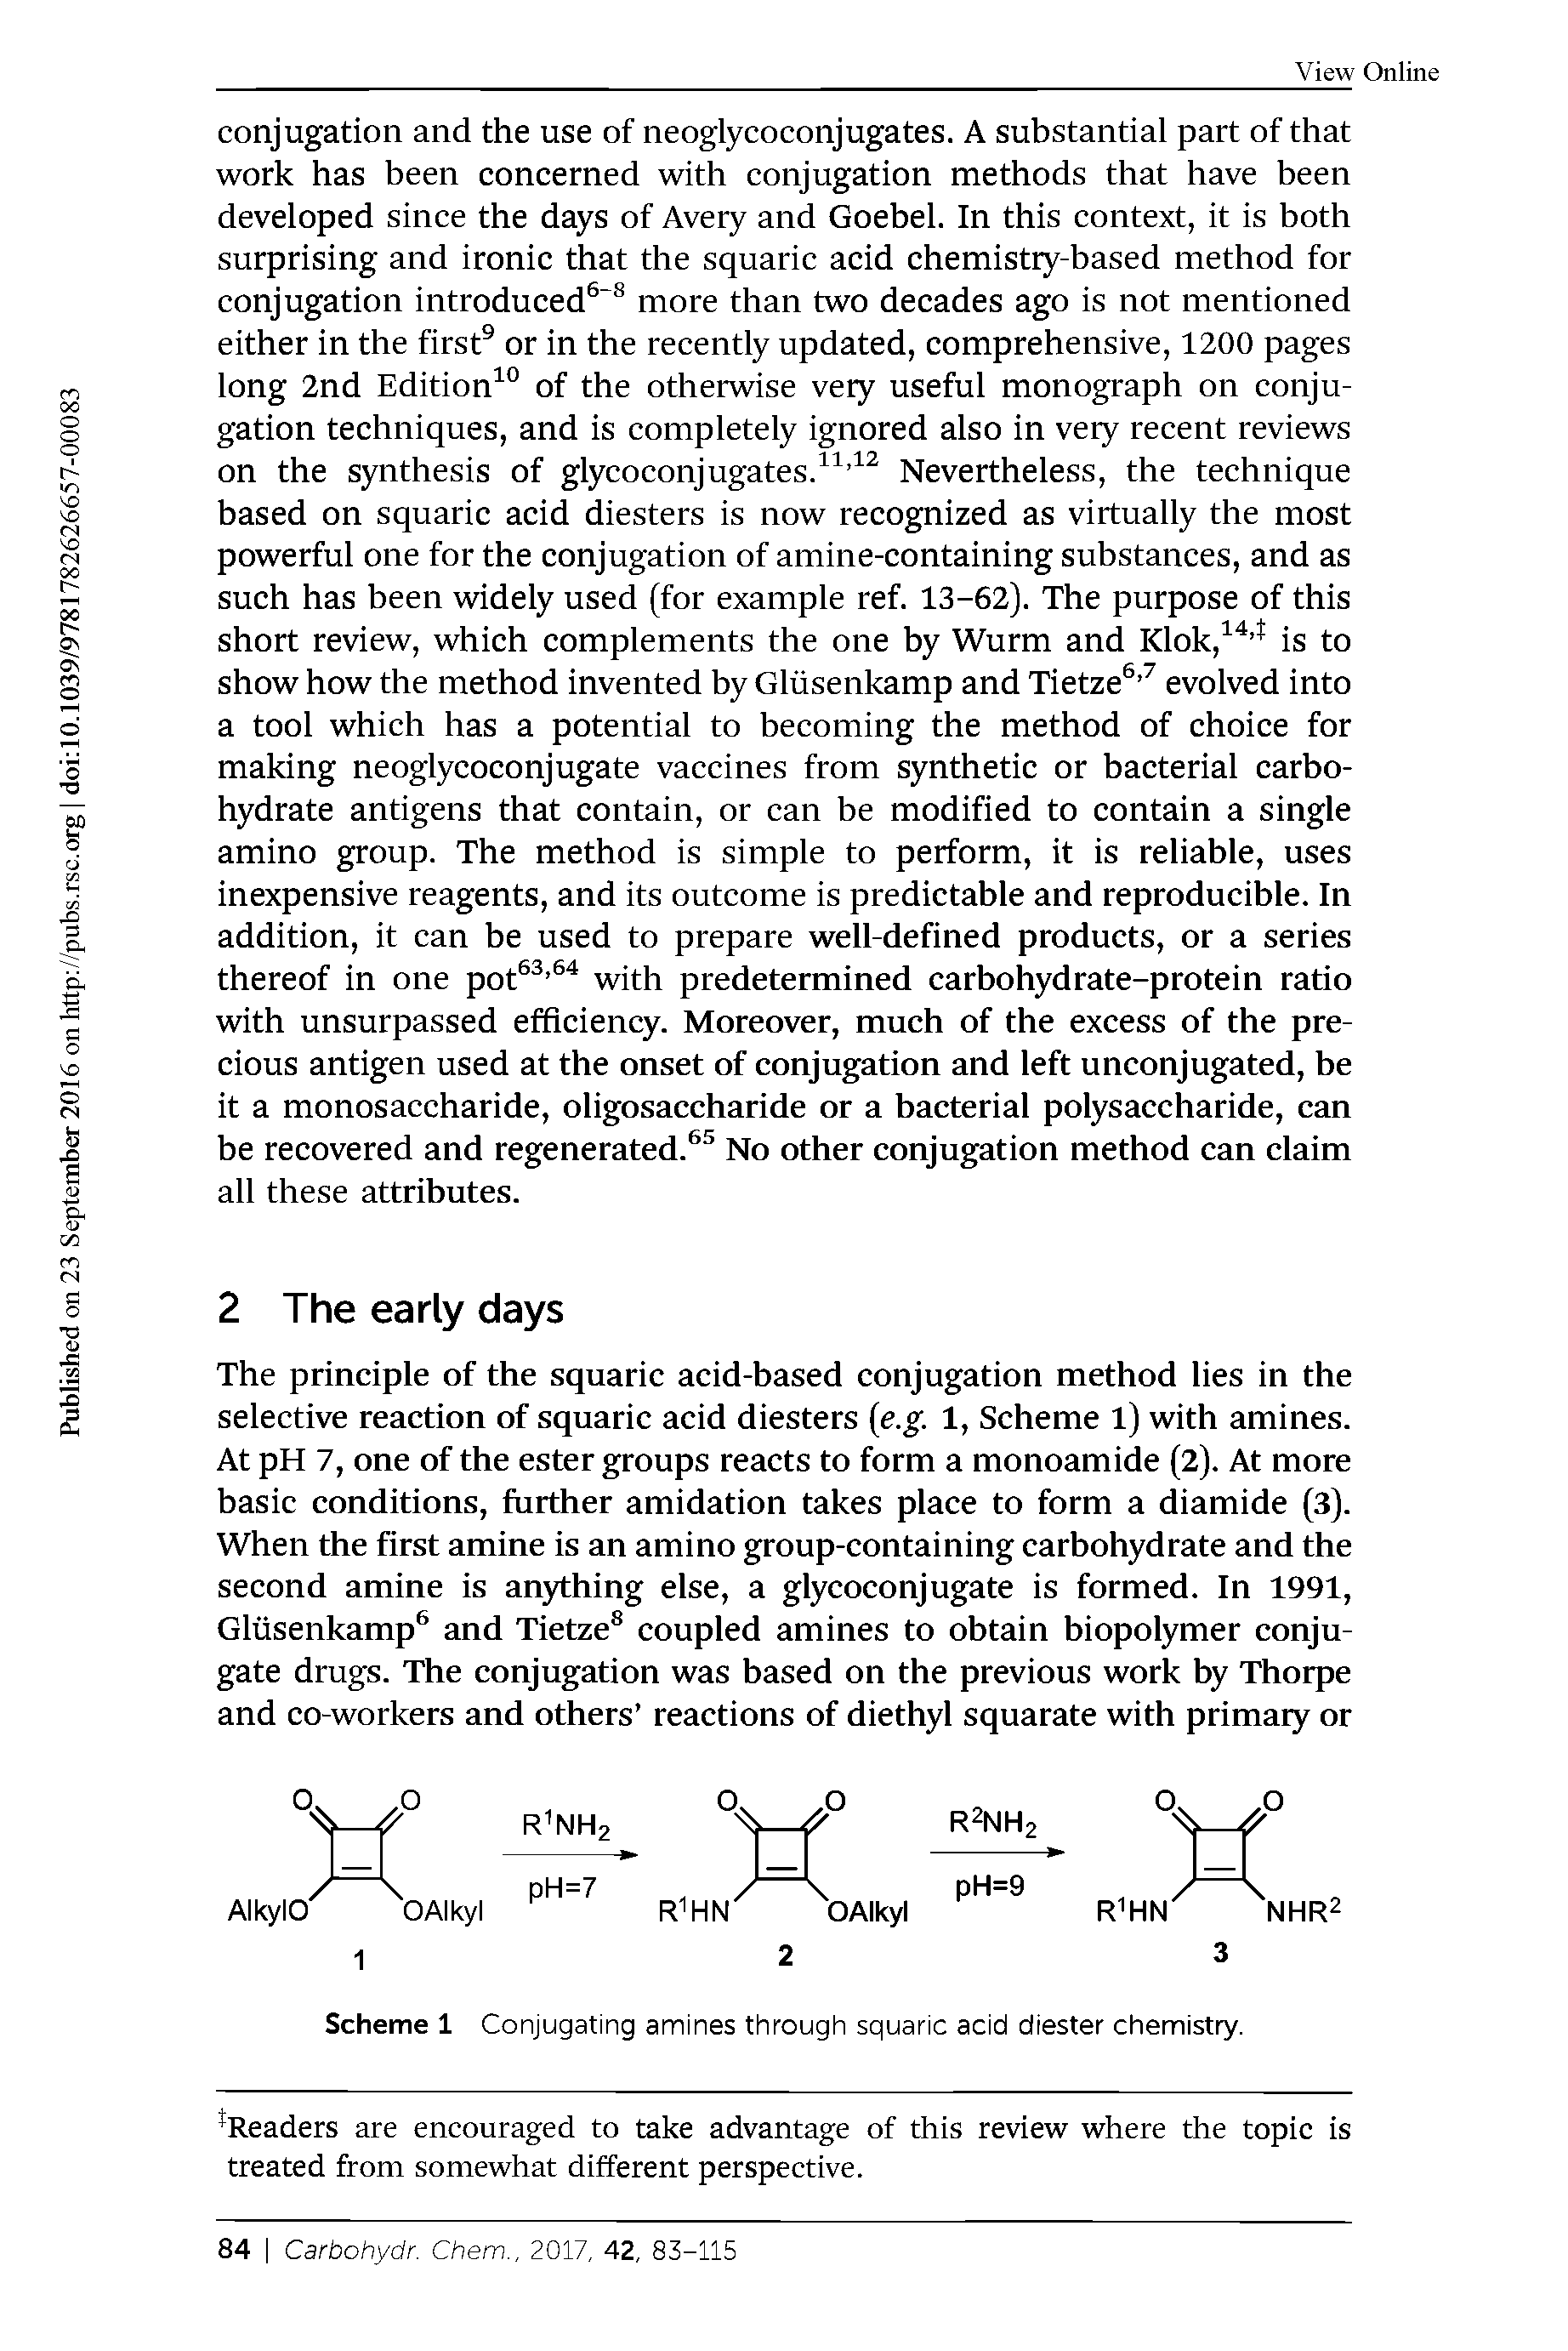 Scheme 1 Conjugating amines through squaric acid diester chemistry.